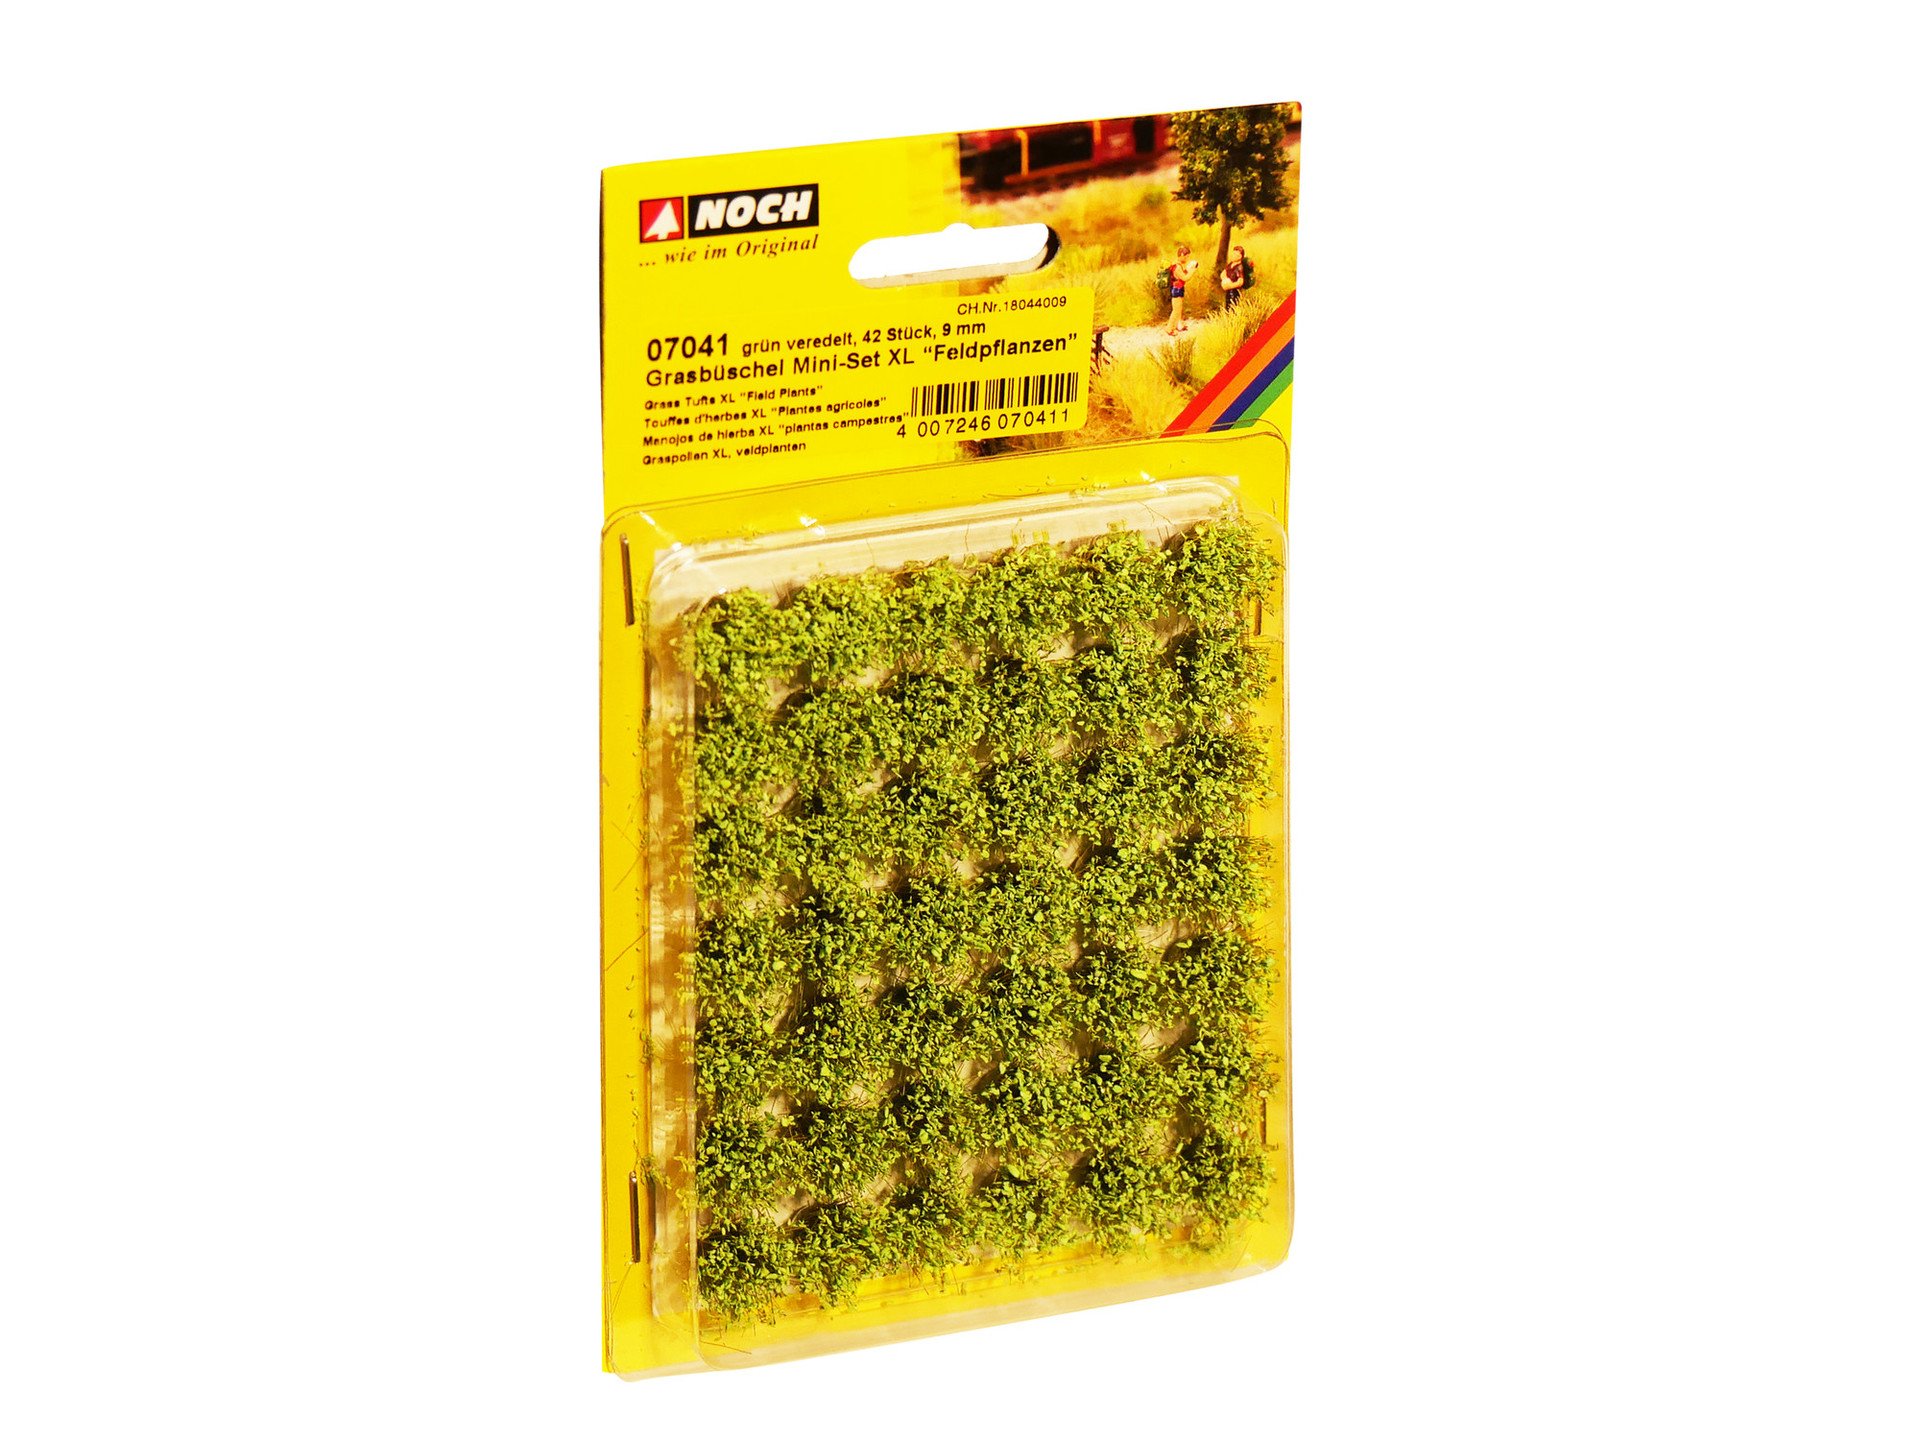 Grasbüschel Mini Set XL Feldpflanzen, grün veredelt, 42 Stück, 9 mm